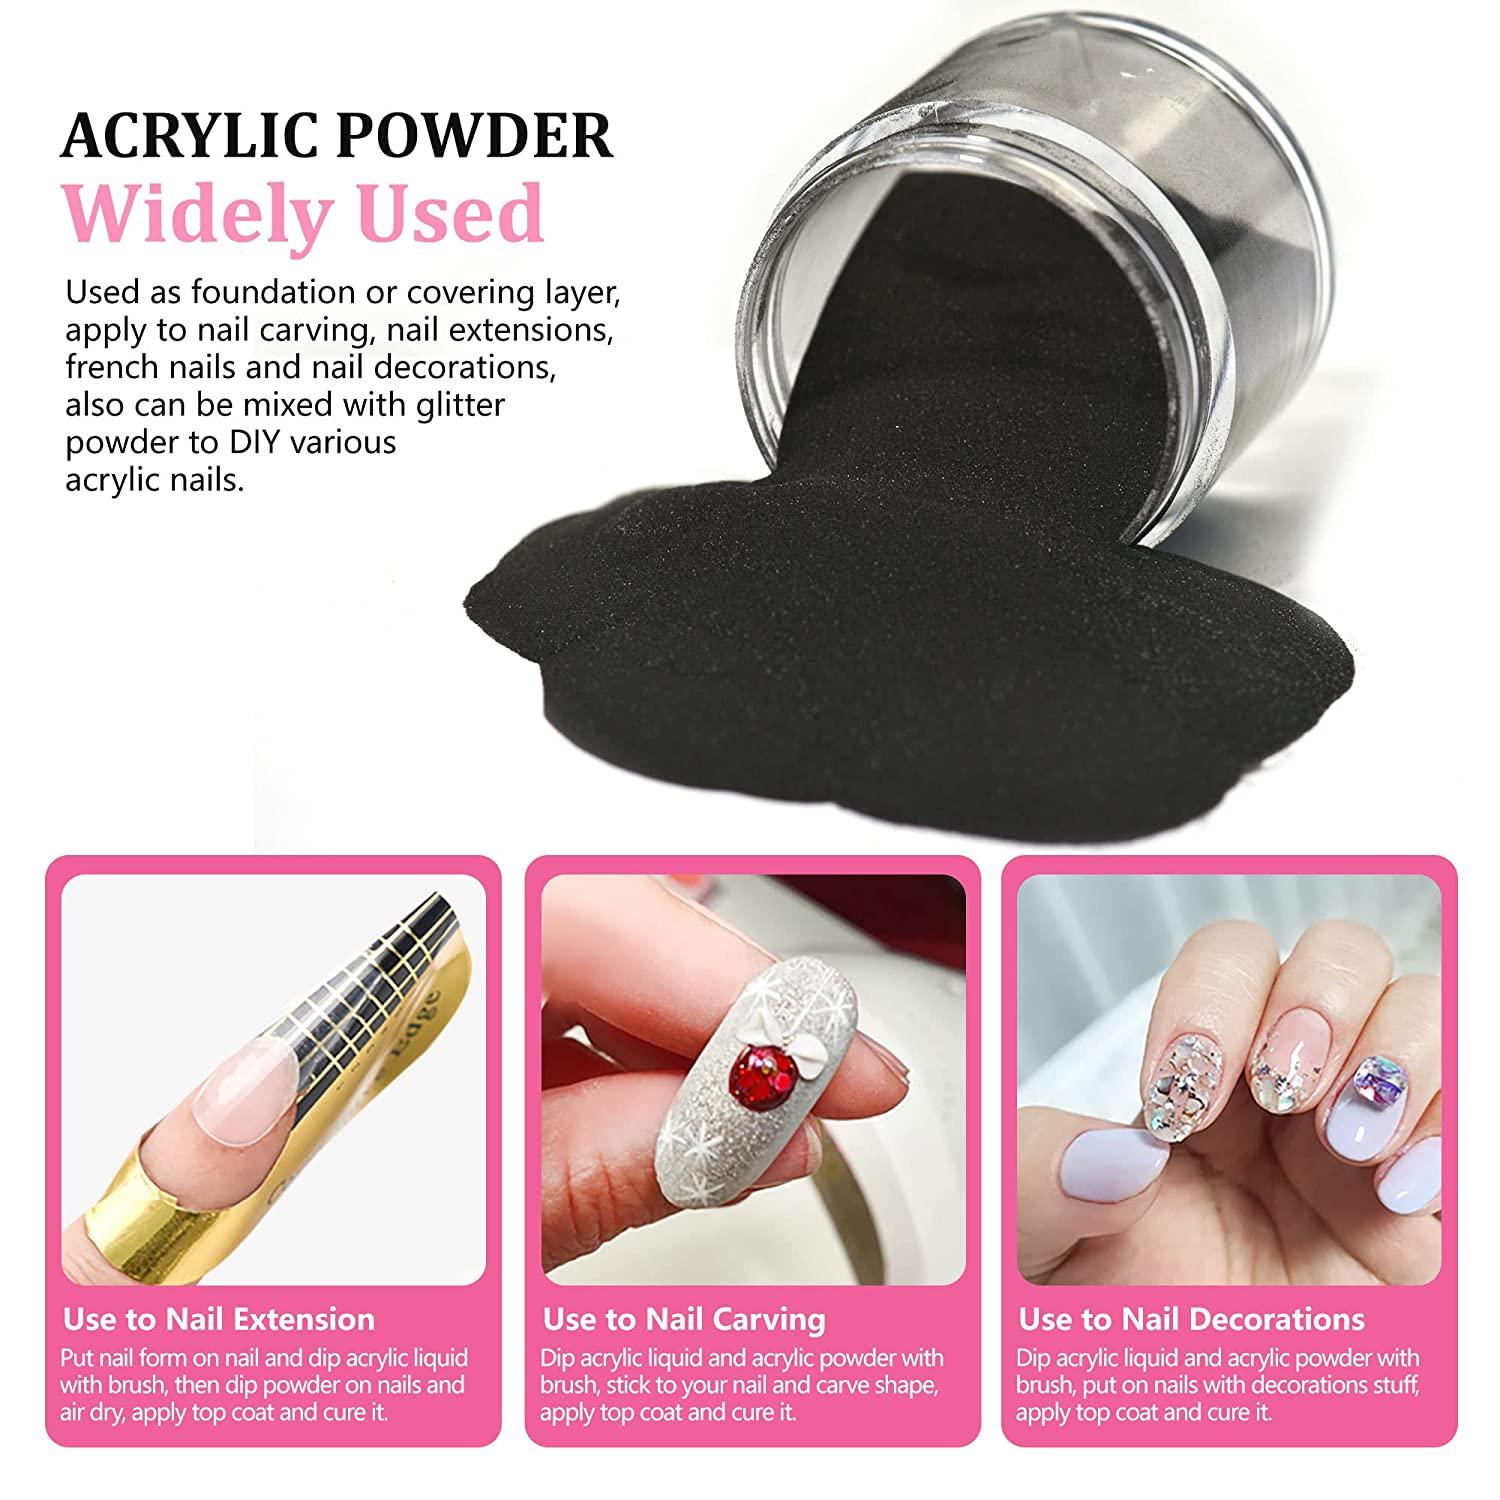 Molisaka Black Acrylic Powder for Nails, Professional Glitter